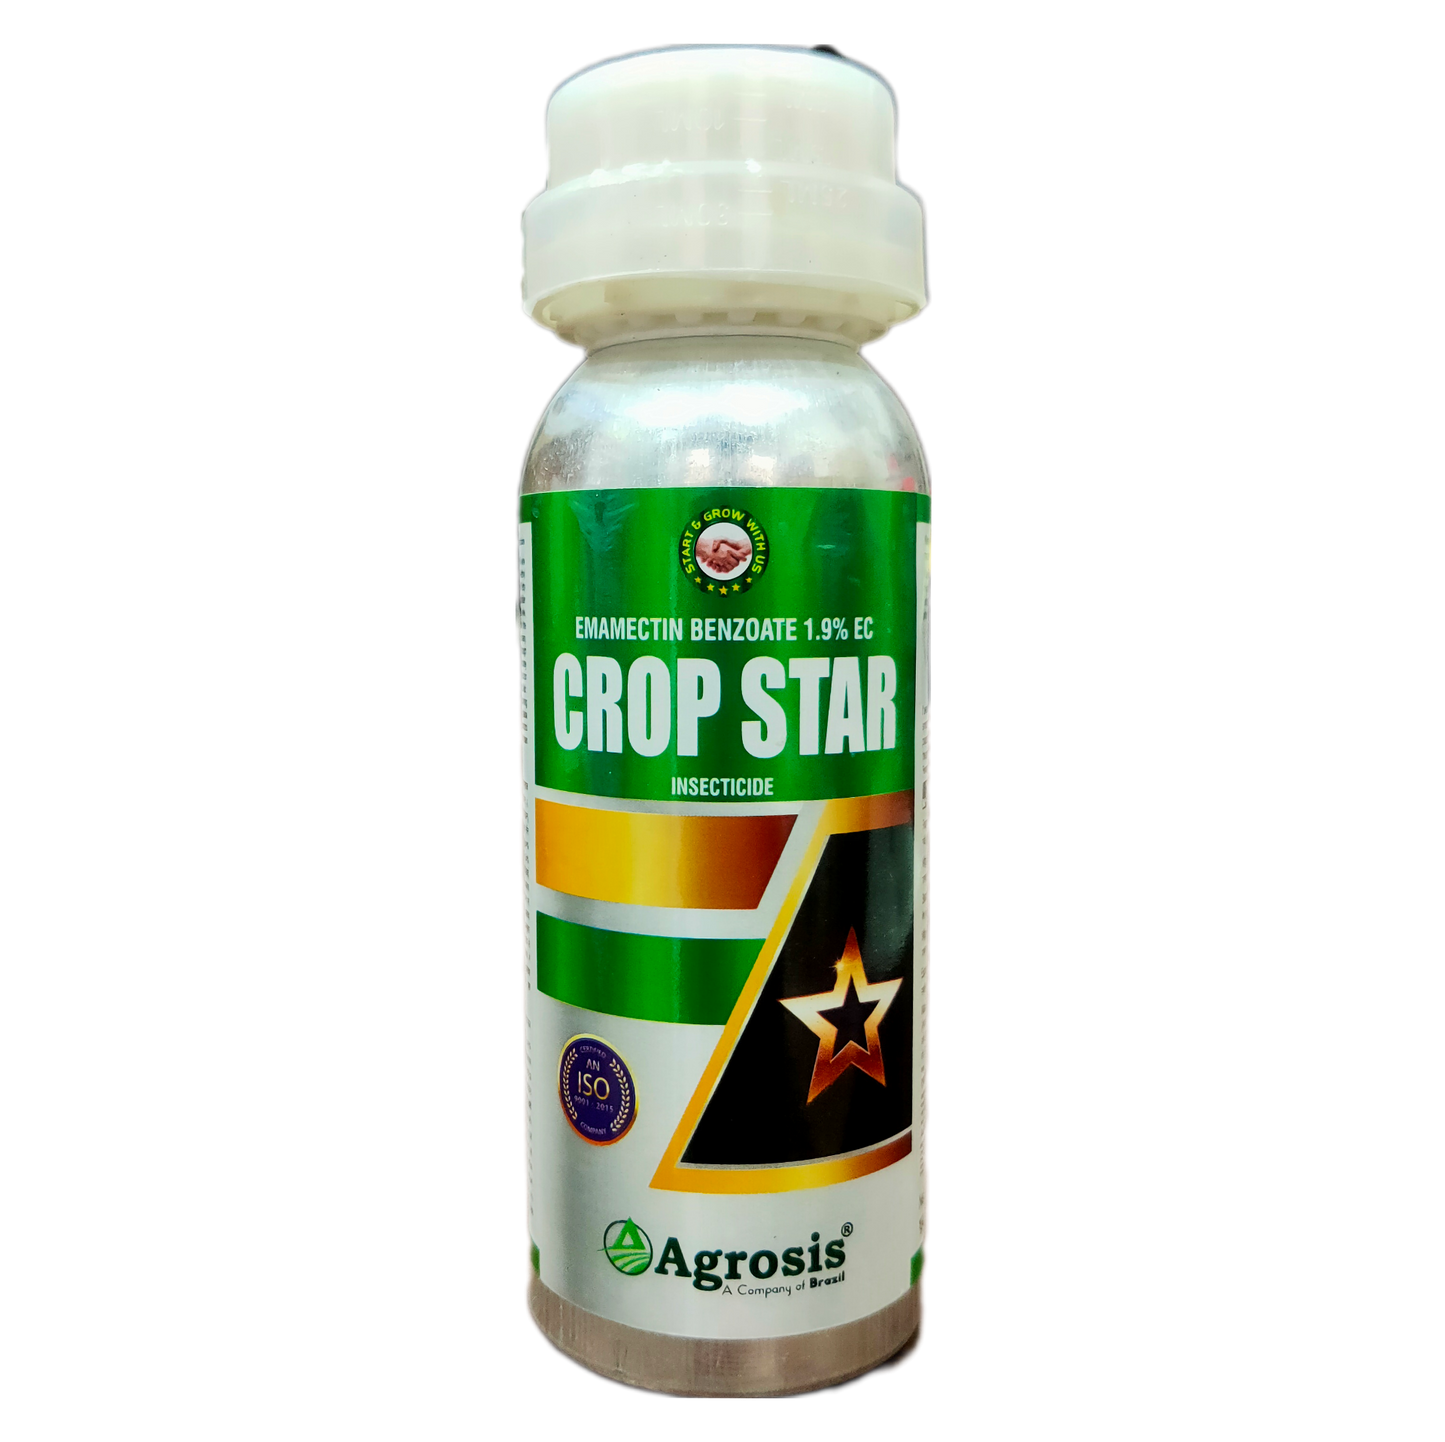 Crop Star - Emamectin Benzoate 1.9% EC Insecticide